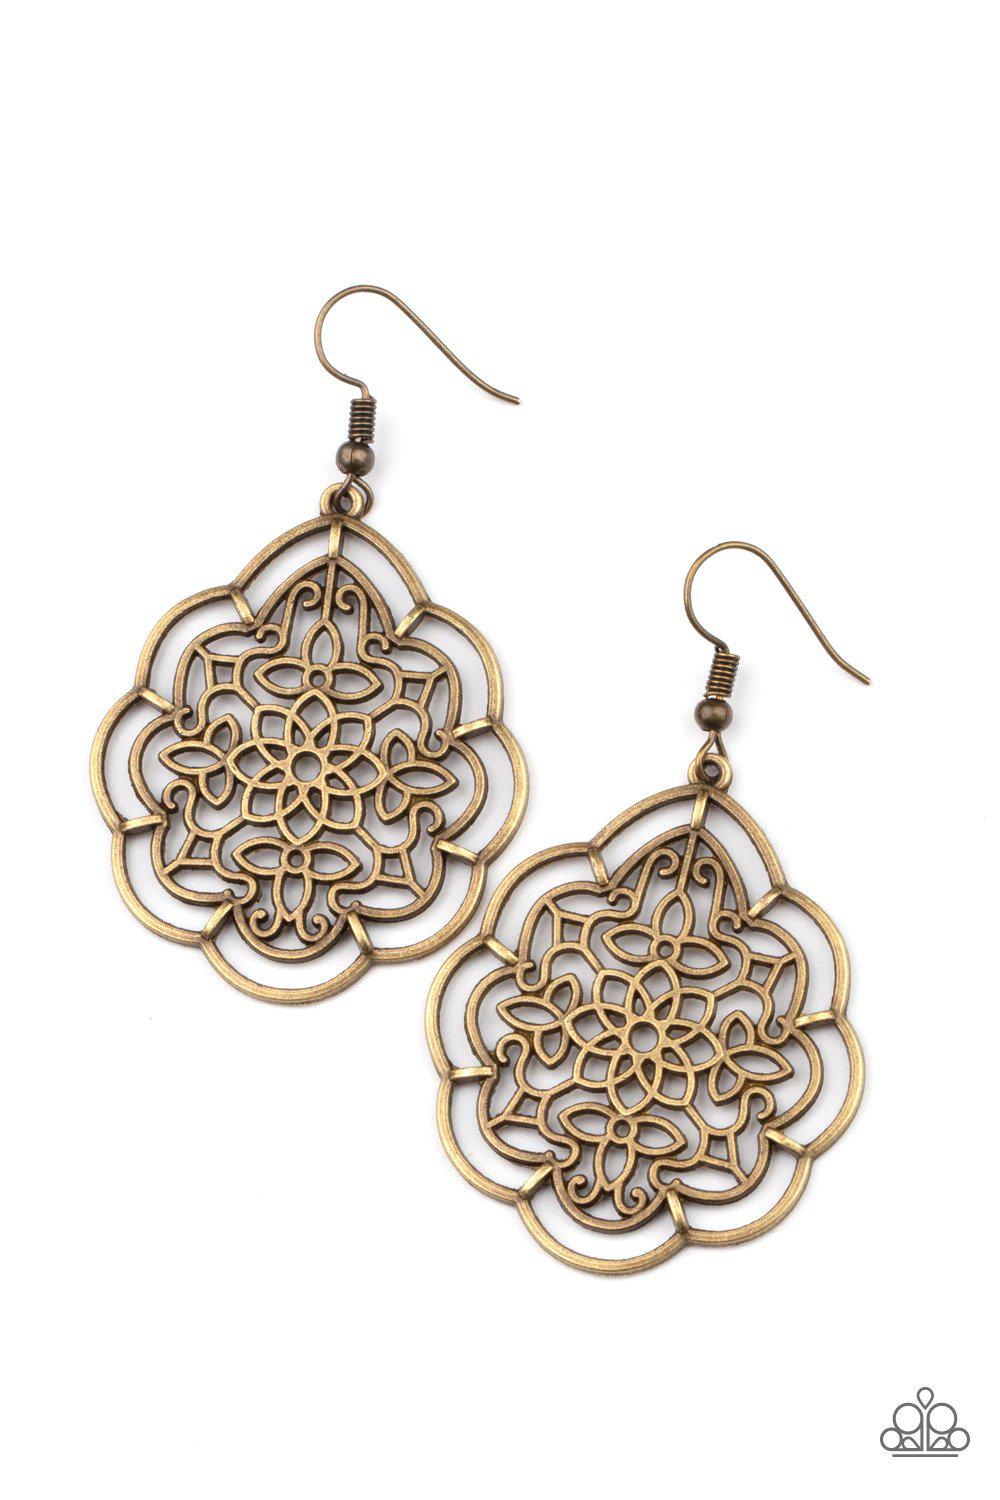 Tour De Taj Mahal Brass Earrings - Paparazzi Accessories- lightbox - CarasShop.com - $5 Jewelry by Cara Jewels